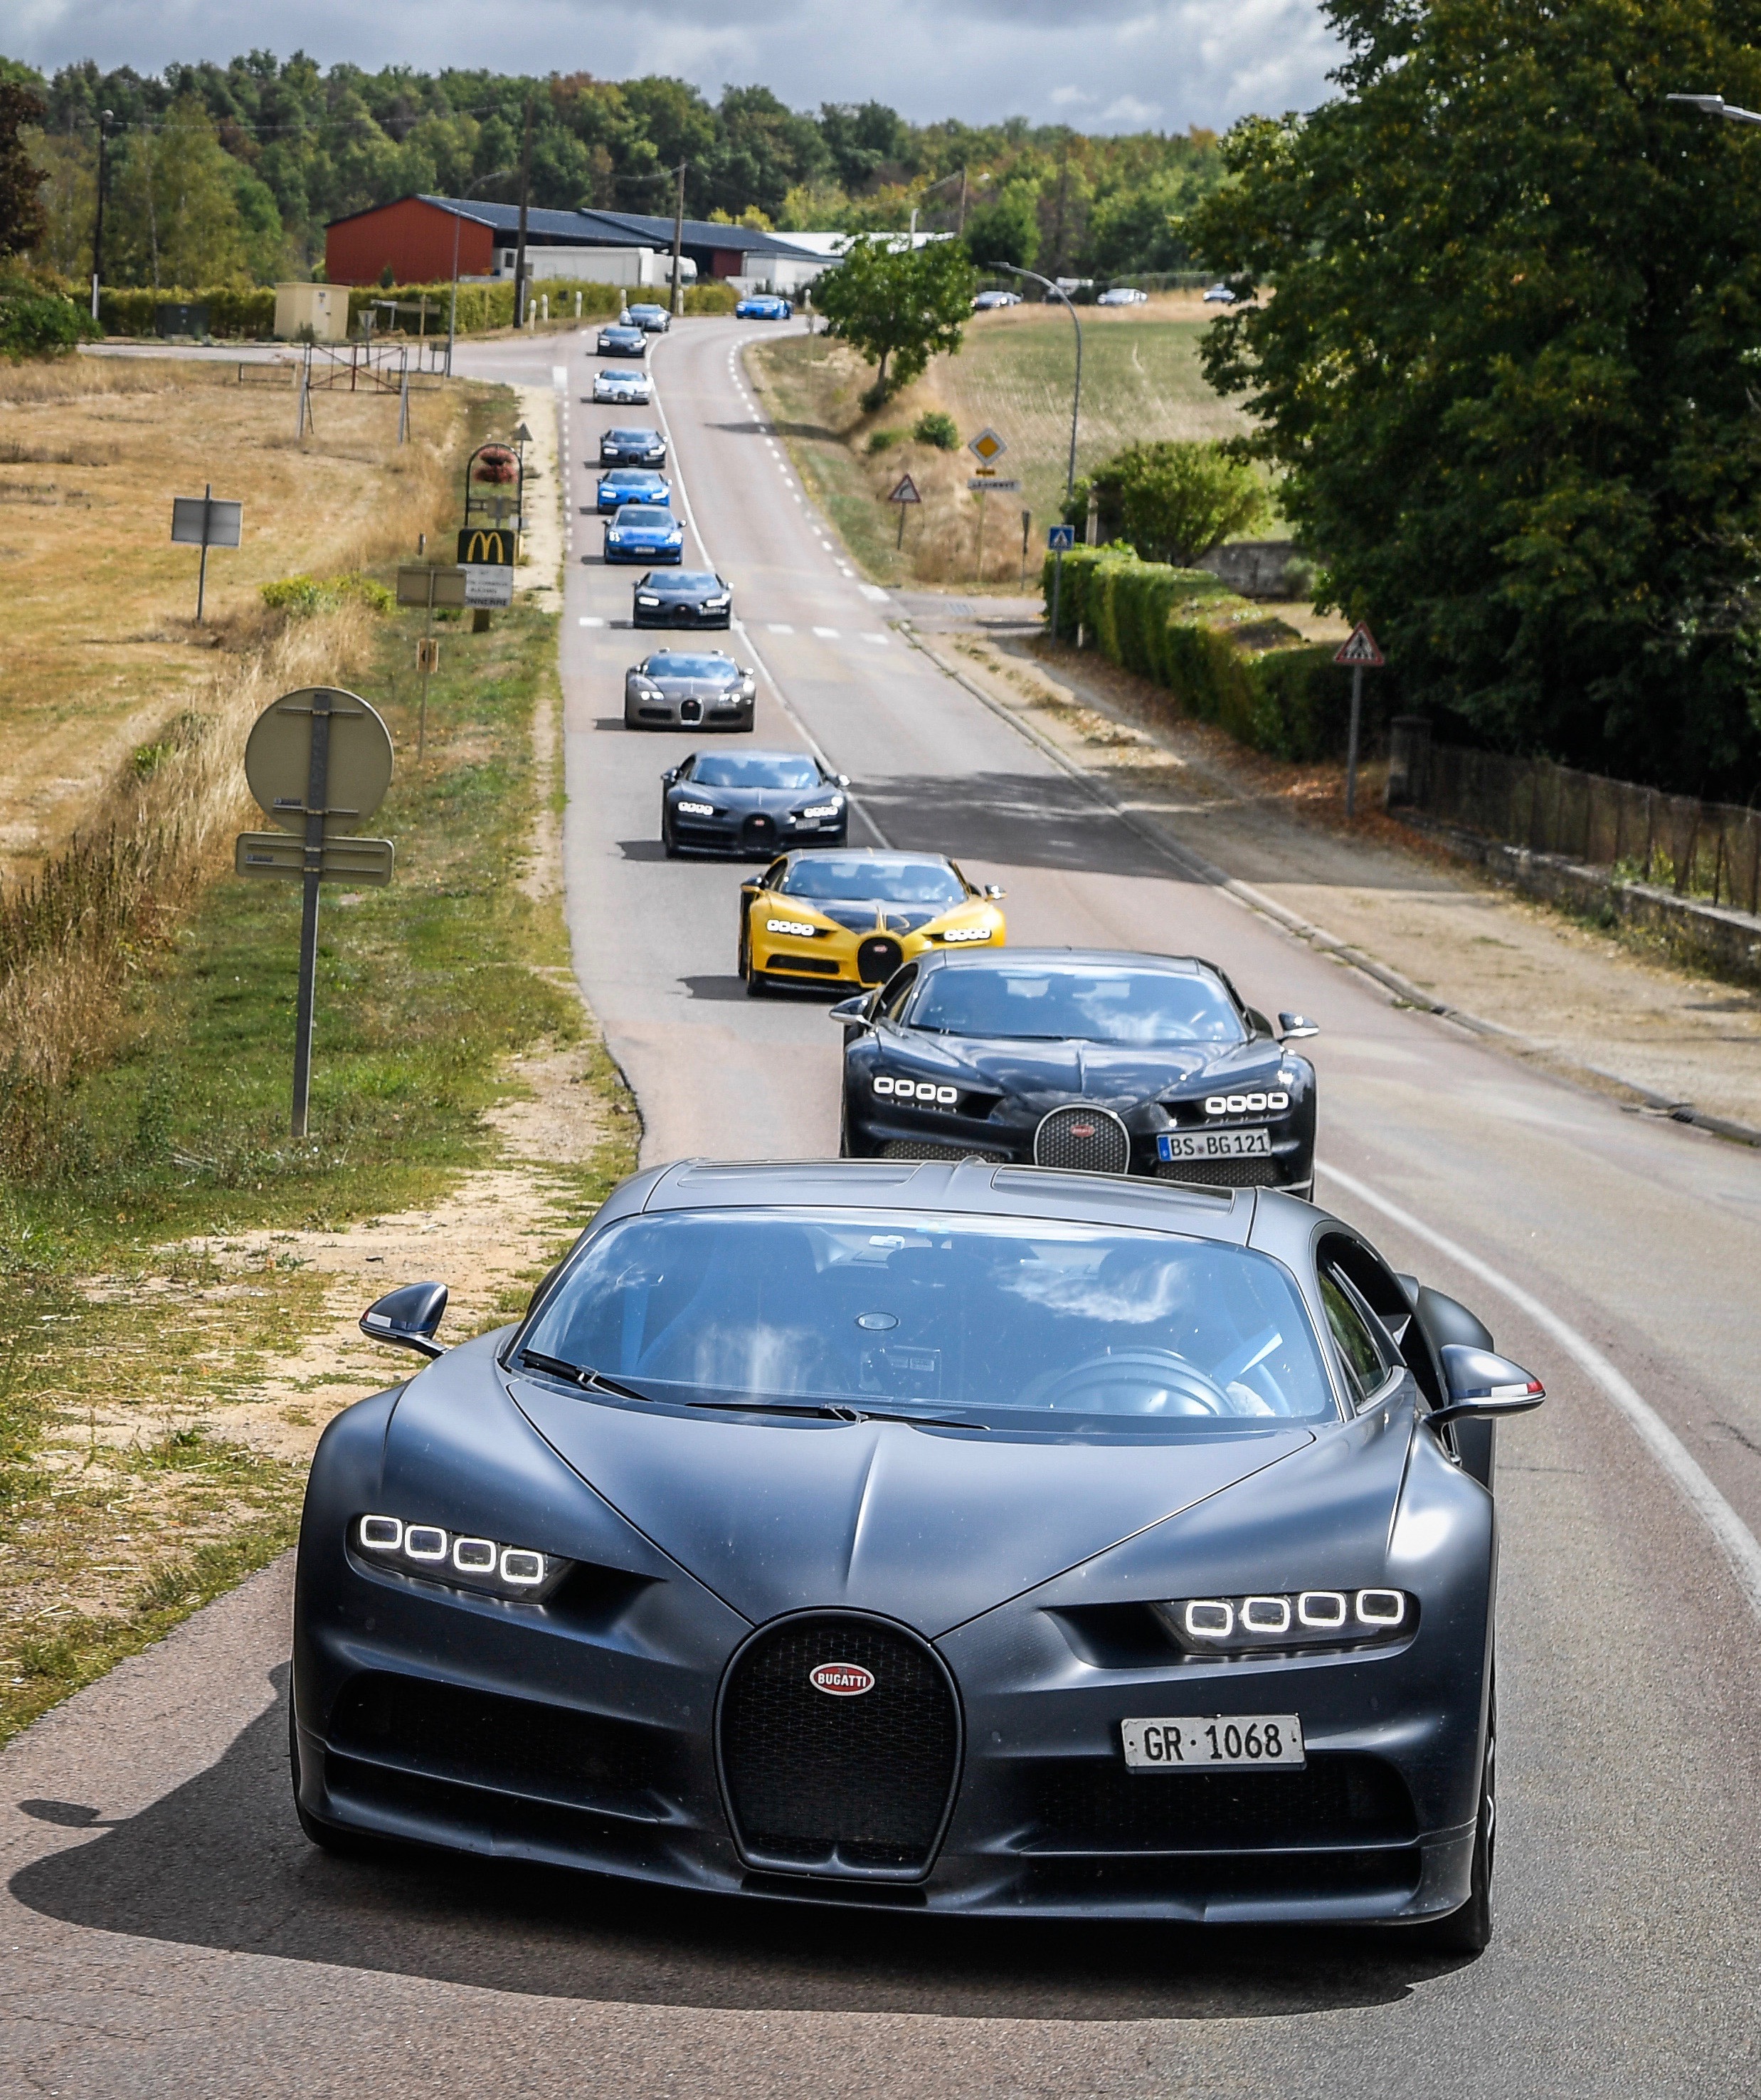 Bugatti Grand Tour, Bugatti supercar owners do the Grand Tour, ClassicCars.com Journal